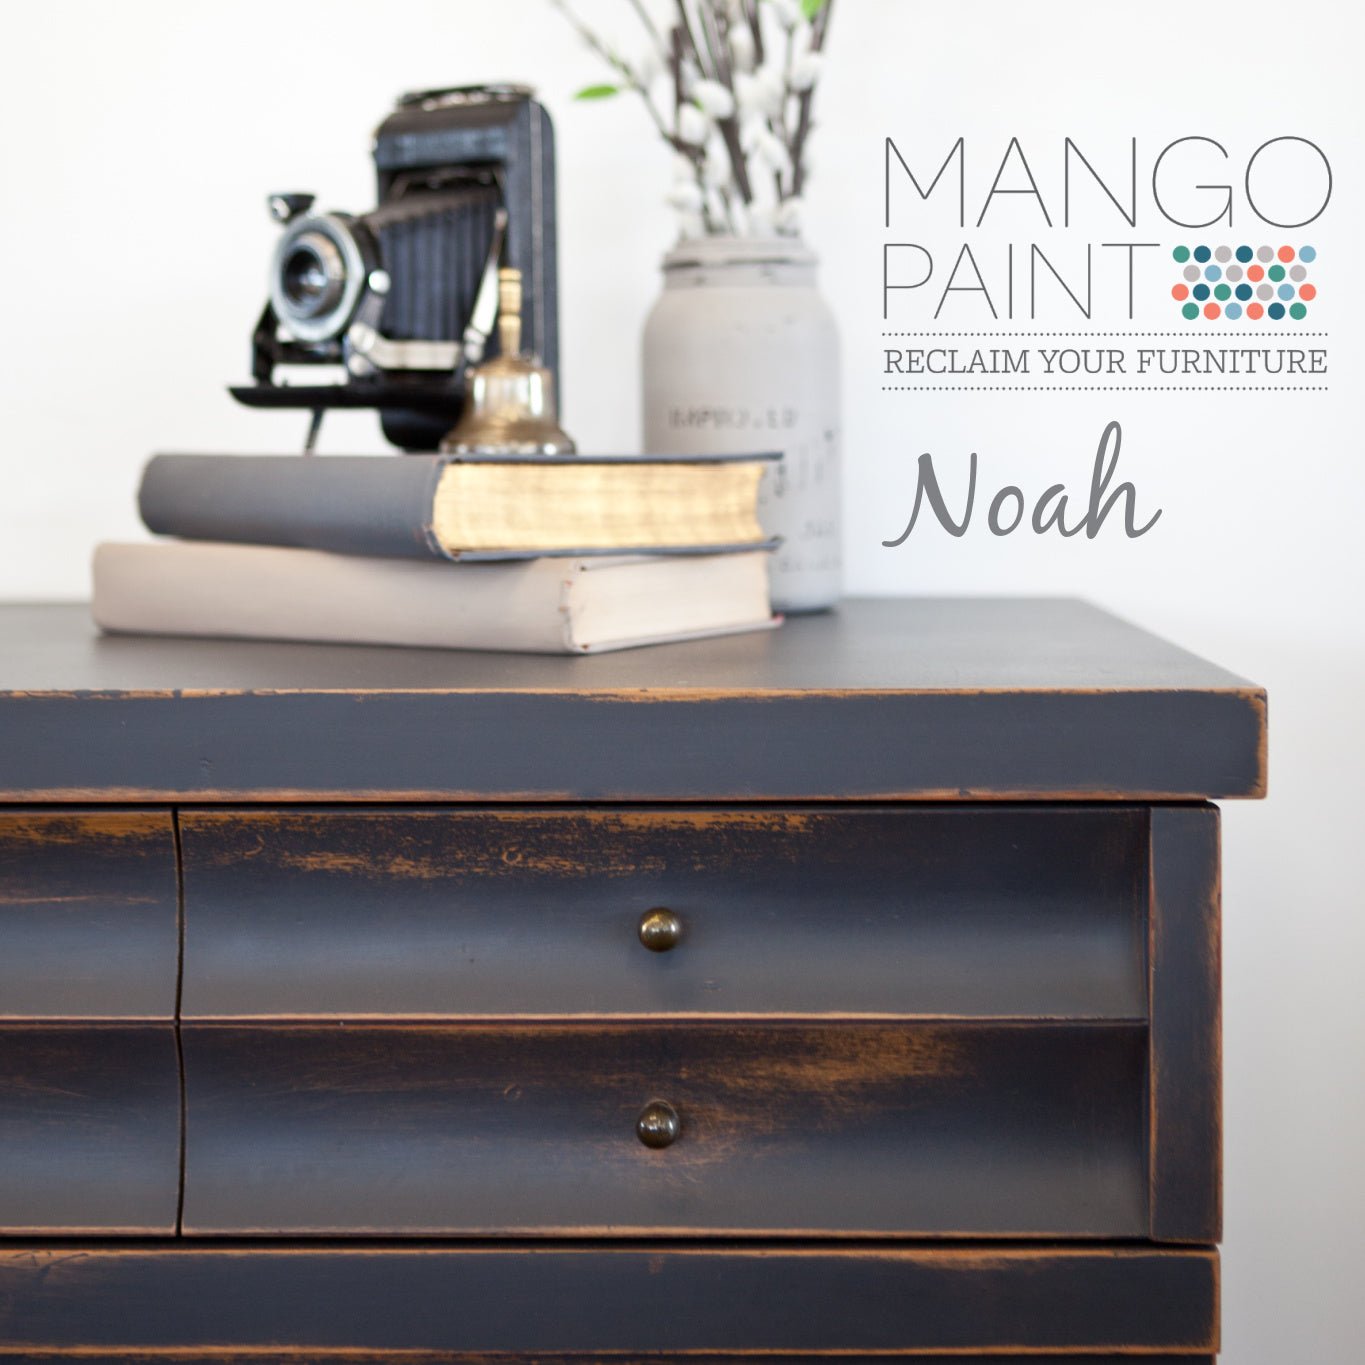 Mango Paint - Noah